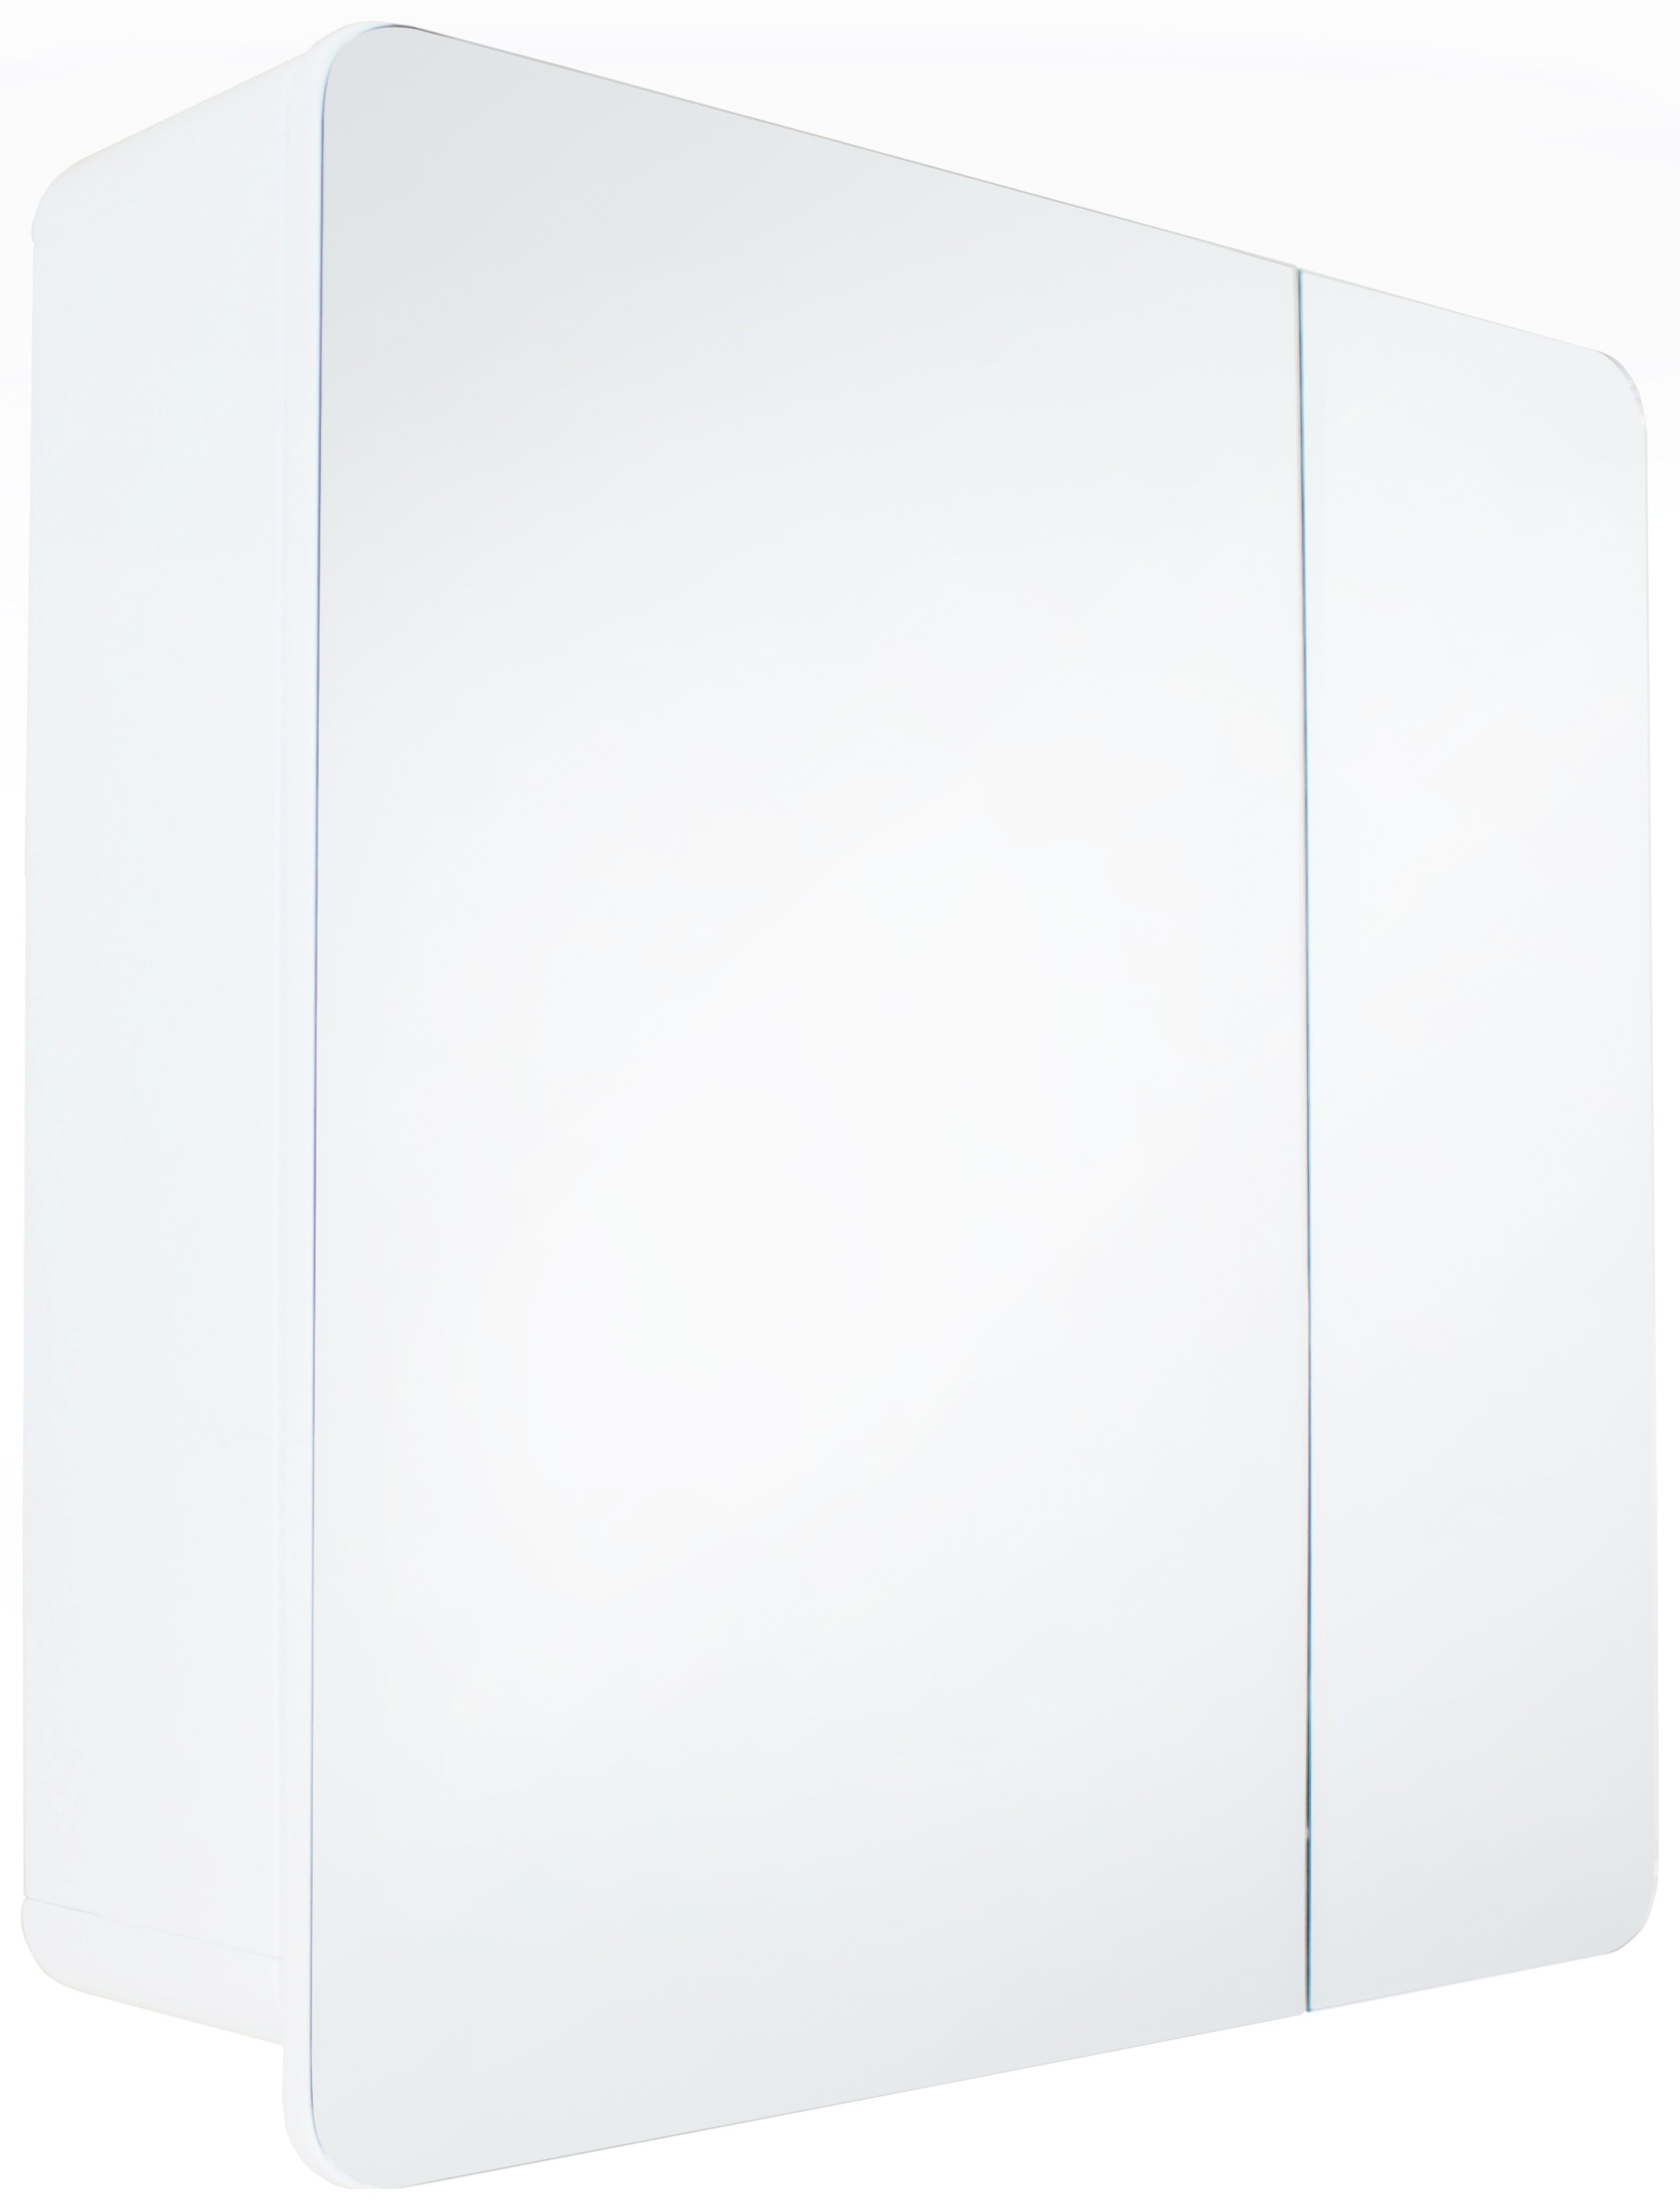 Argos Home Curve 2 Door Mirrored Bathroom Cabinet - White